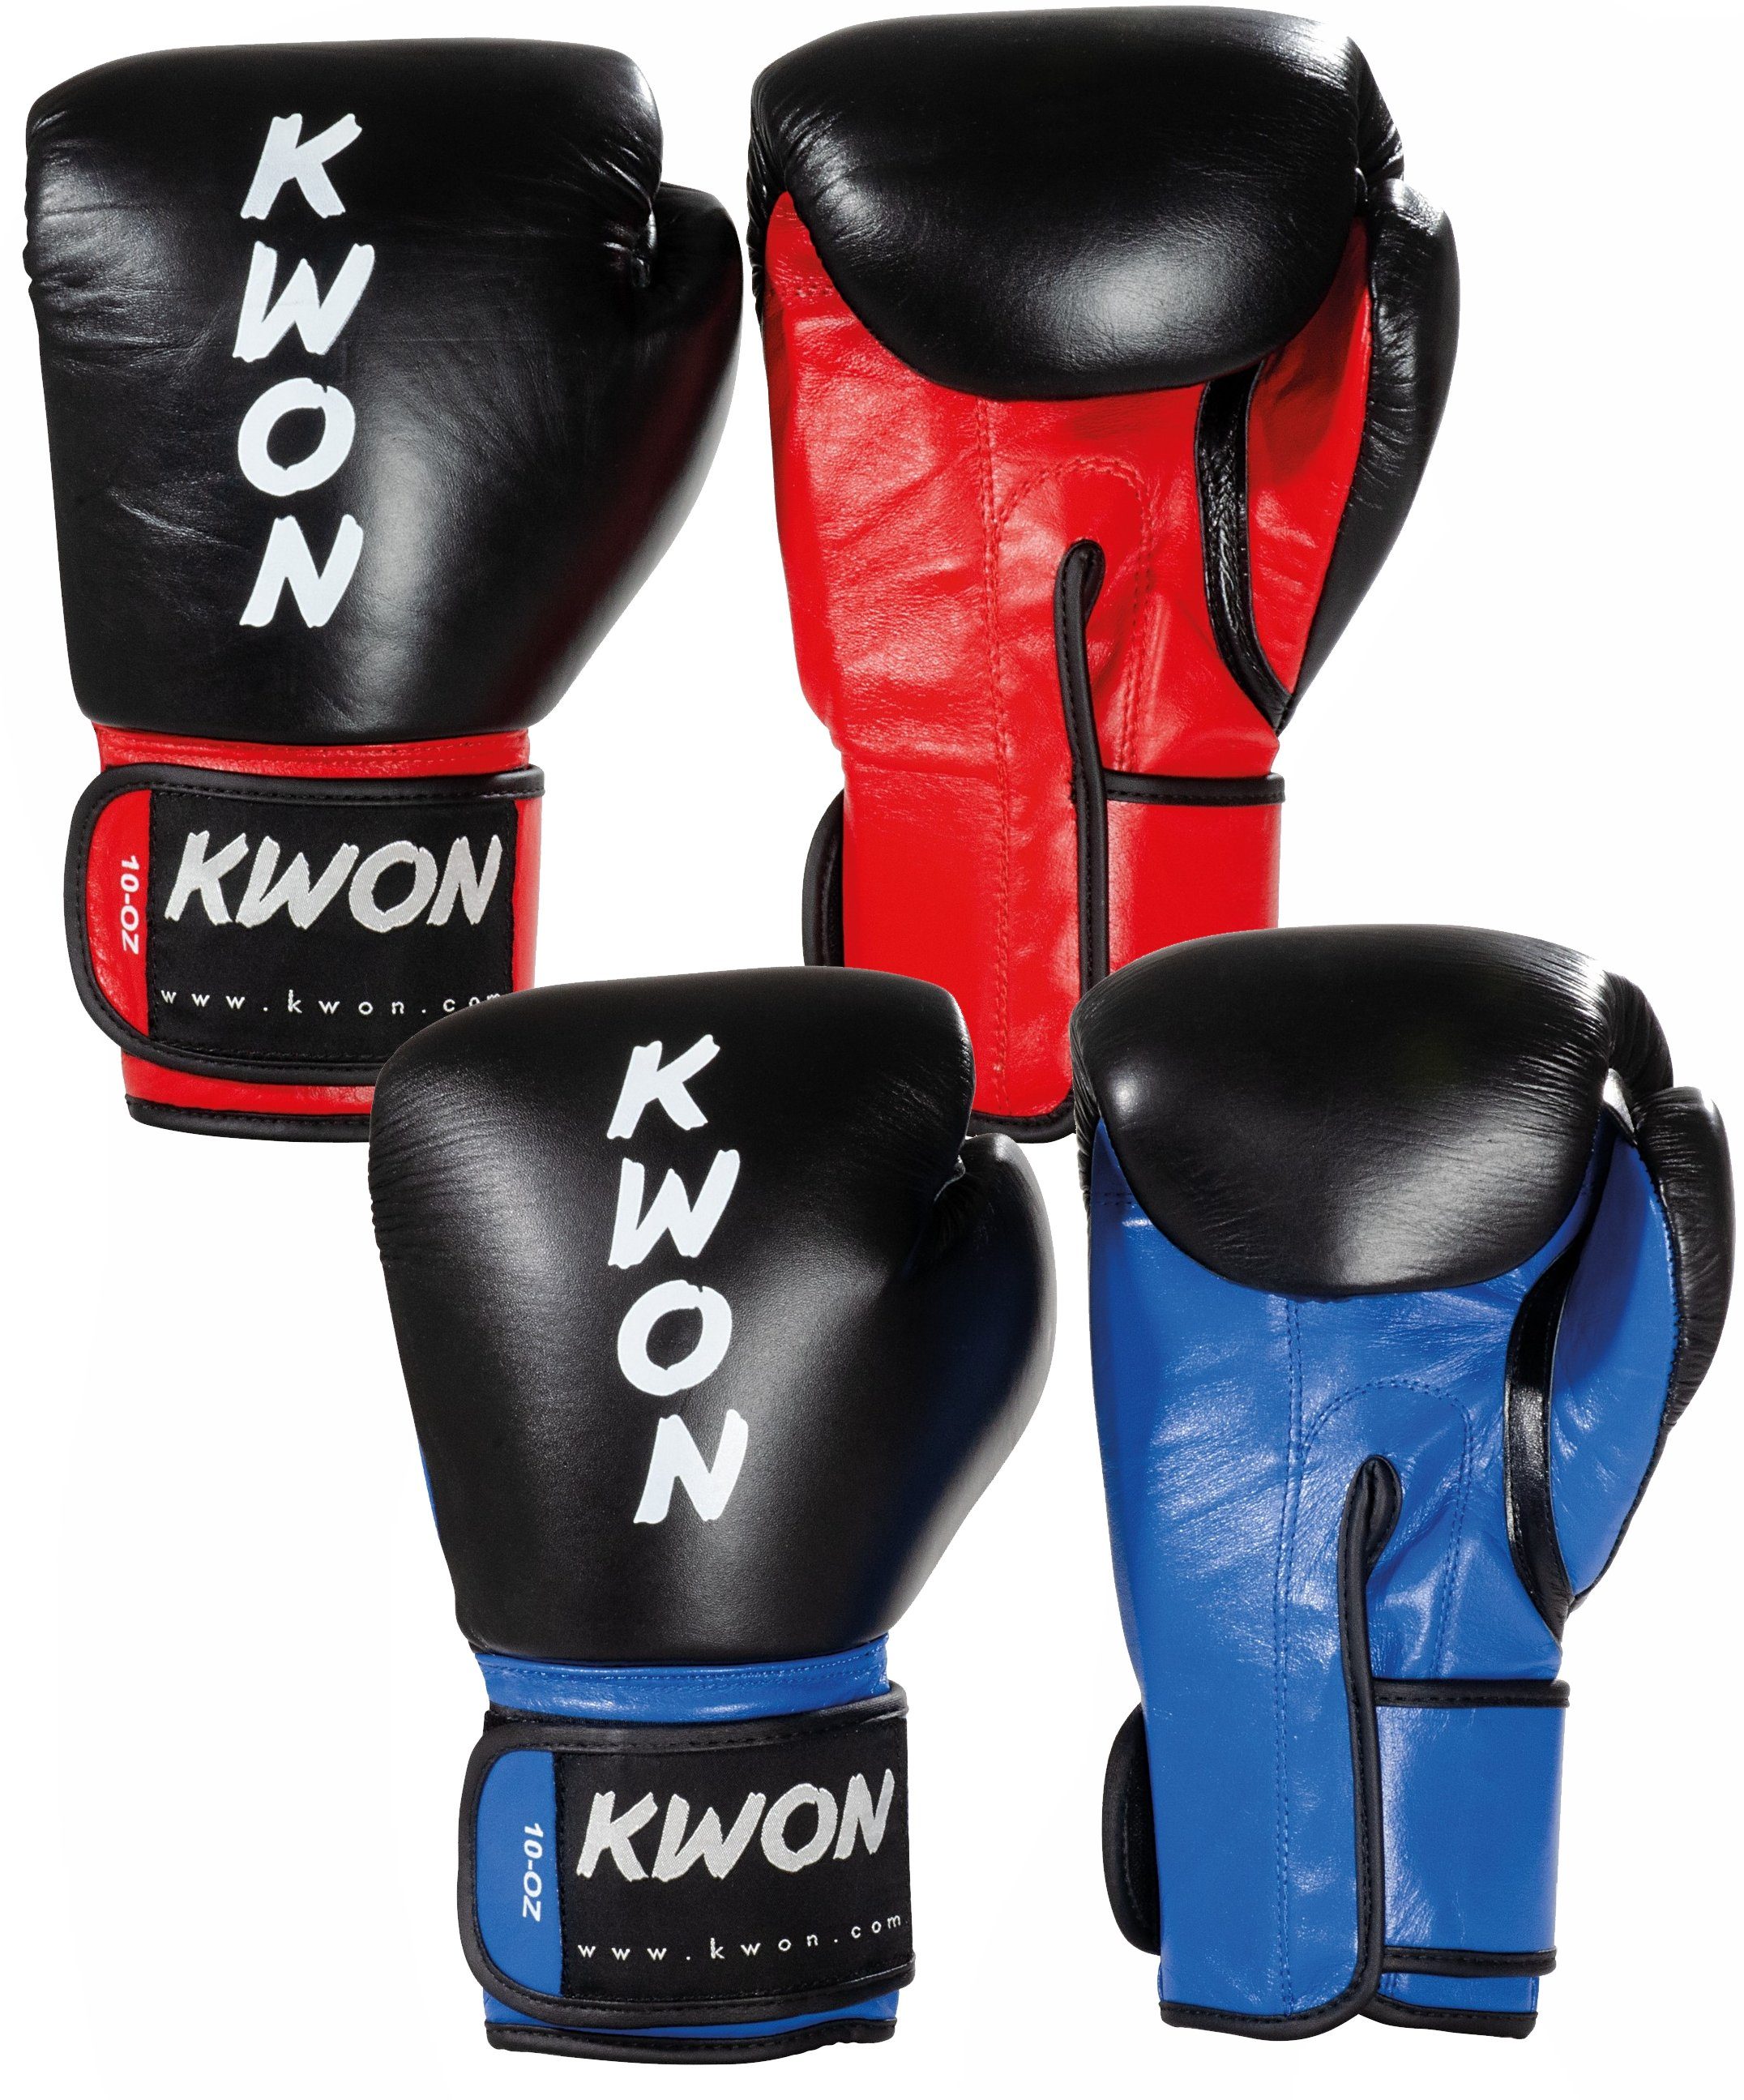 KWON Boxhandschuhe Profi KO Champ Leder Box-Handschuhe Boxen Kickboxen  Thaiboxen (Vollkontakt, Paar), Ergo Form, Profi Ausführung, Echtes Leder,  WKU anerkannt